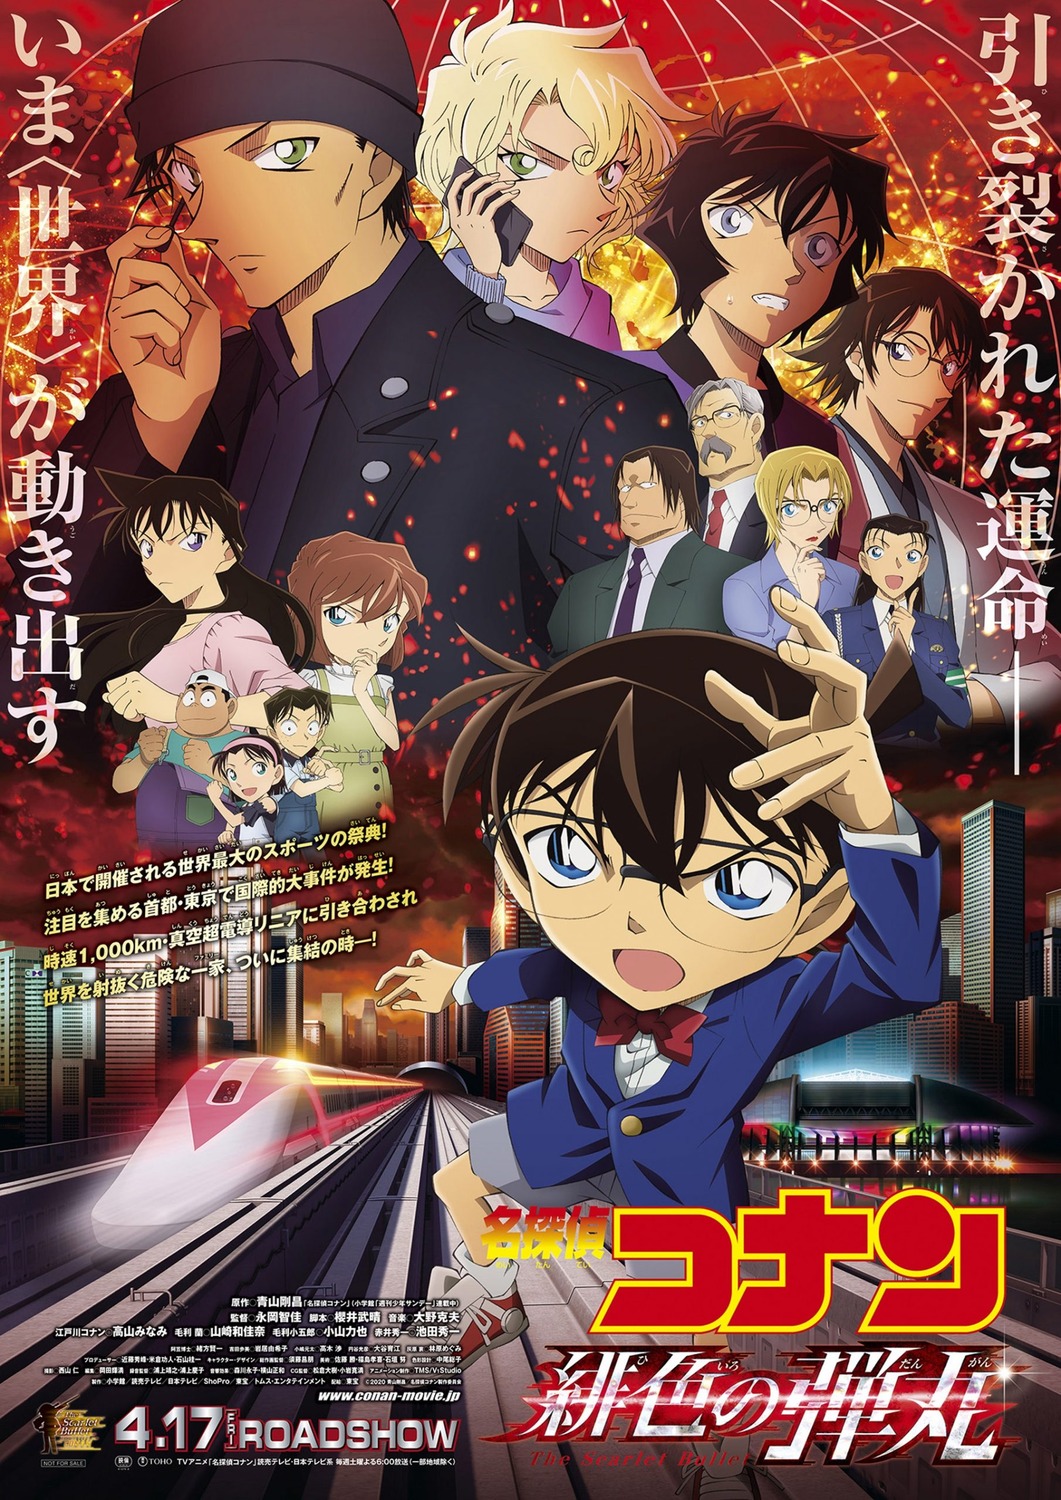 Extra Large Movie Poster Image for Meitantei Conan: Hiiro no dangan 